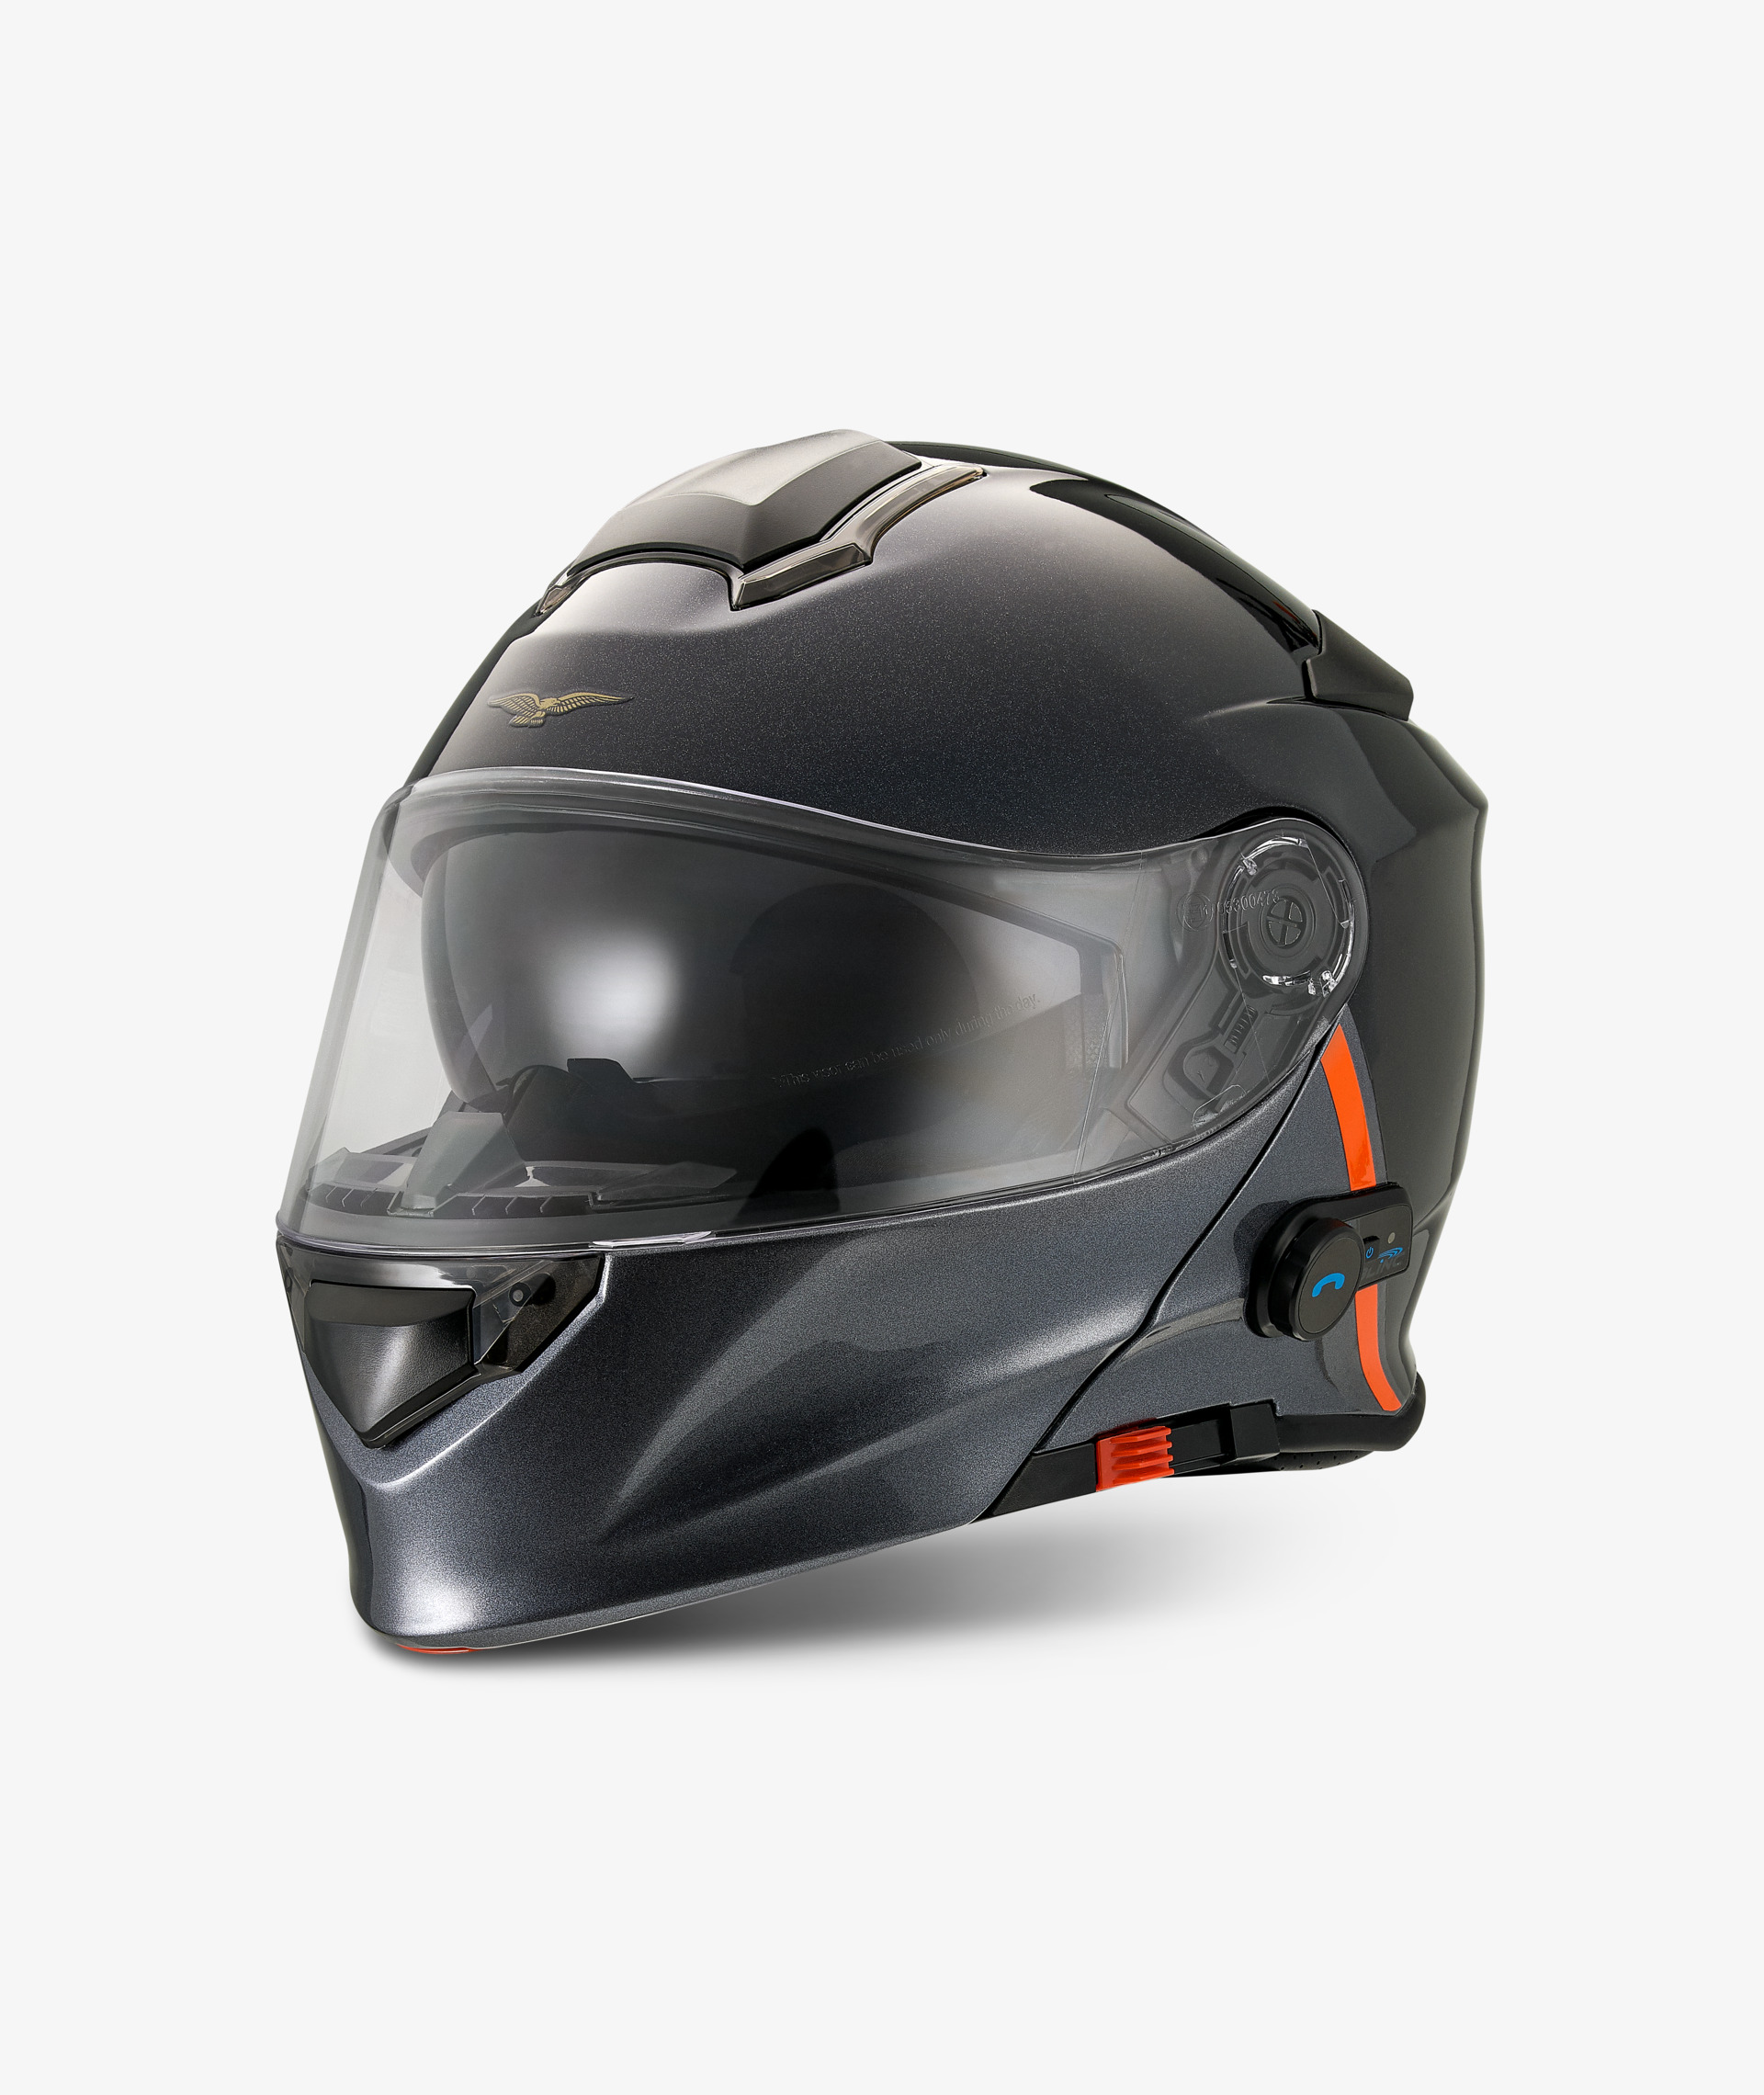 Modular Helmet with Built-In Bluetooth, Modular Helmets